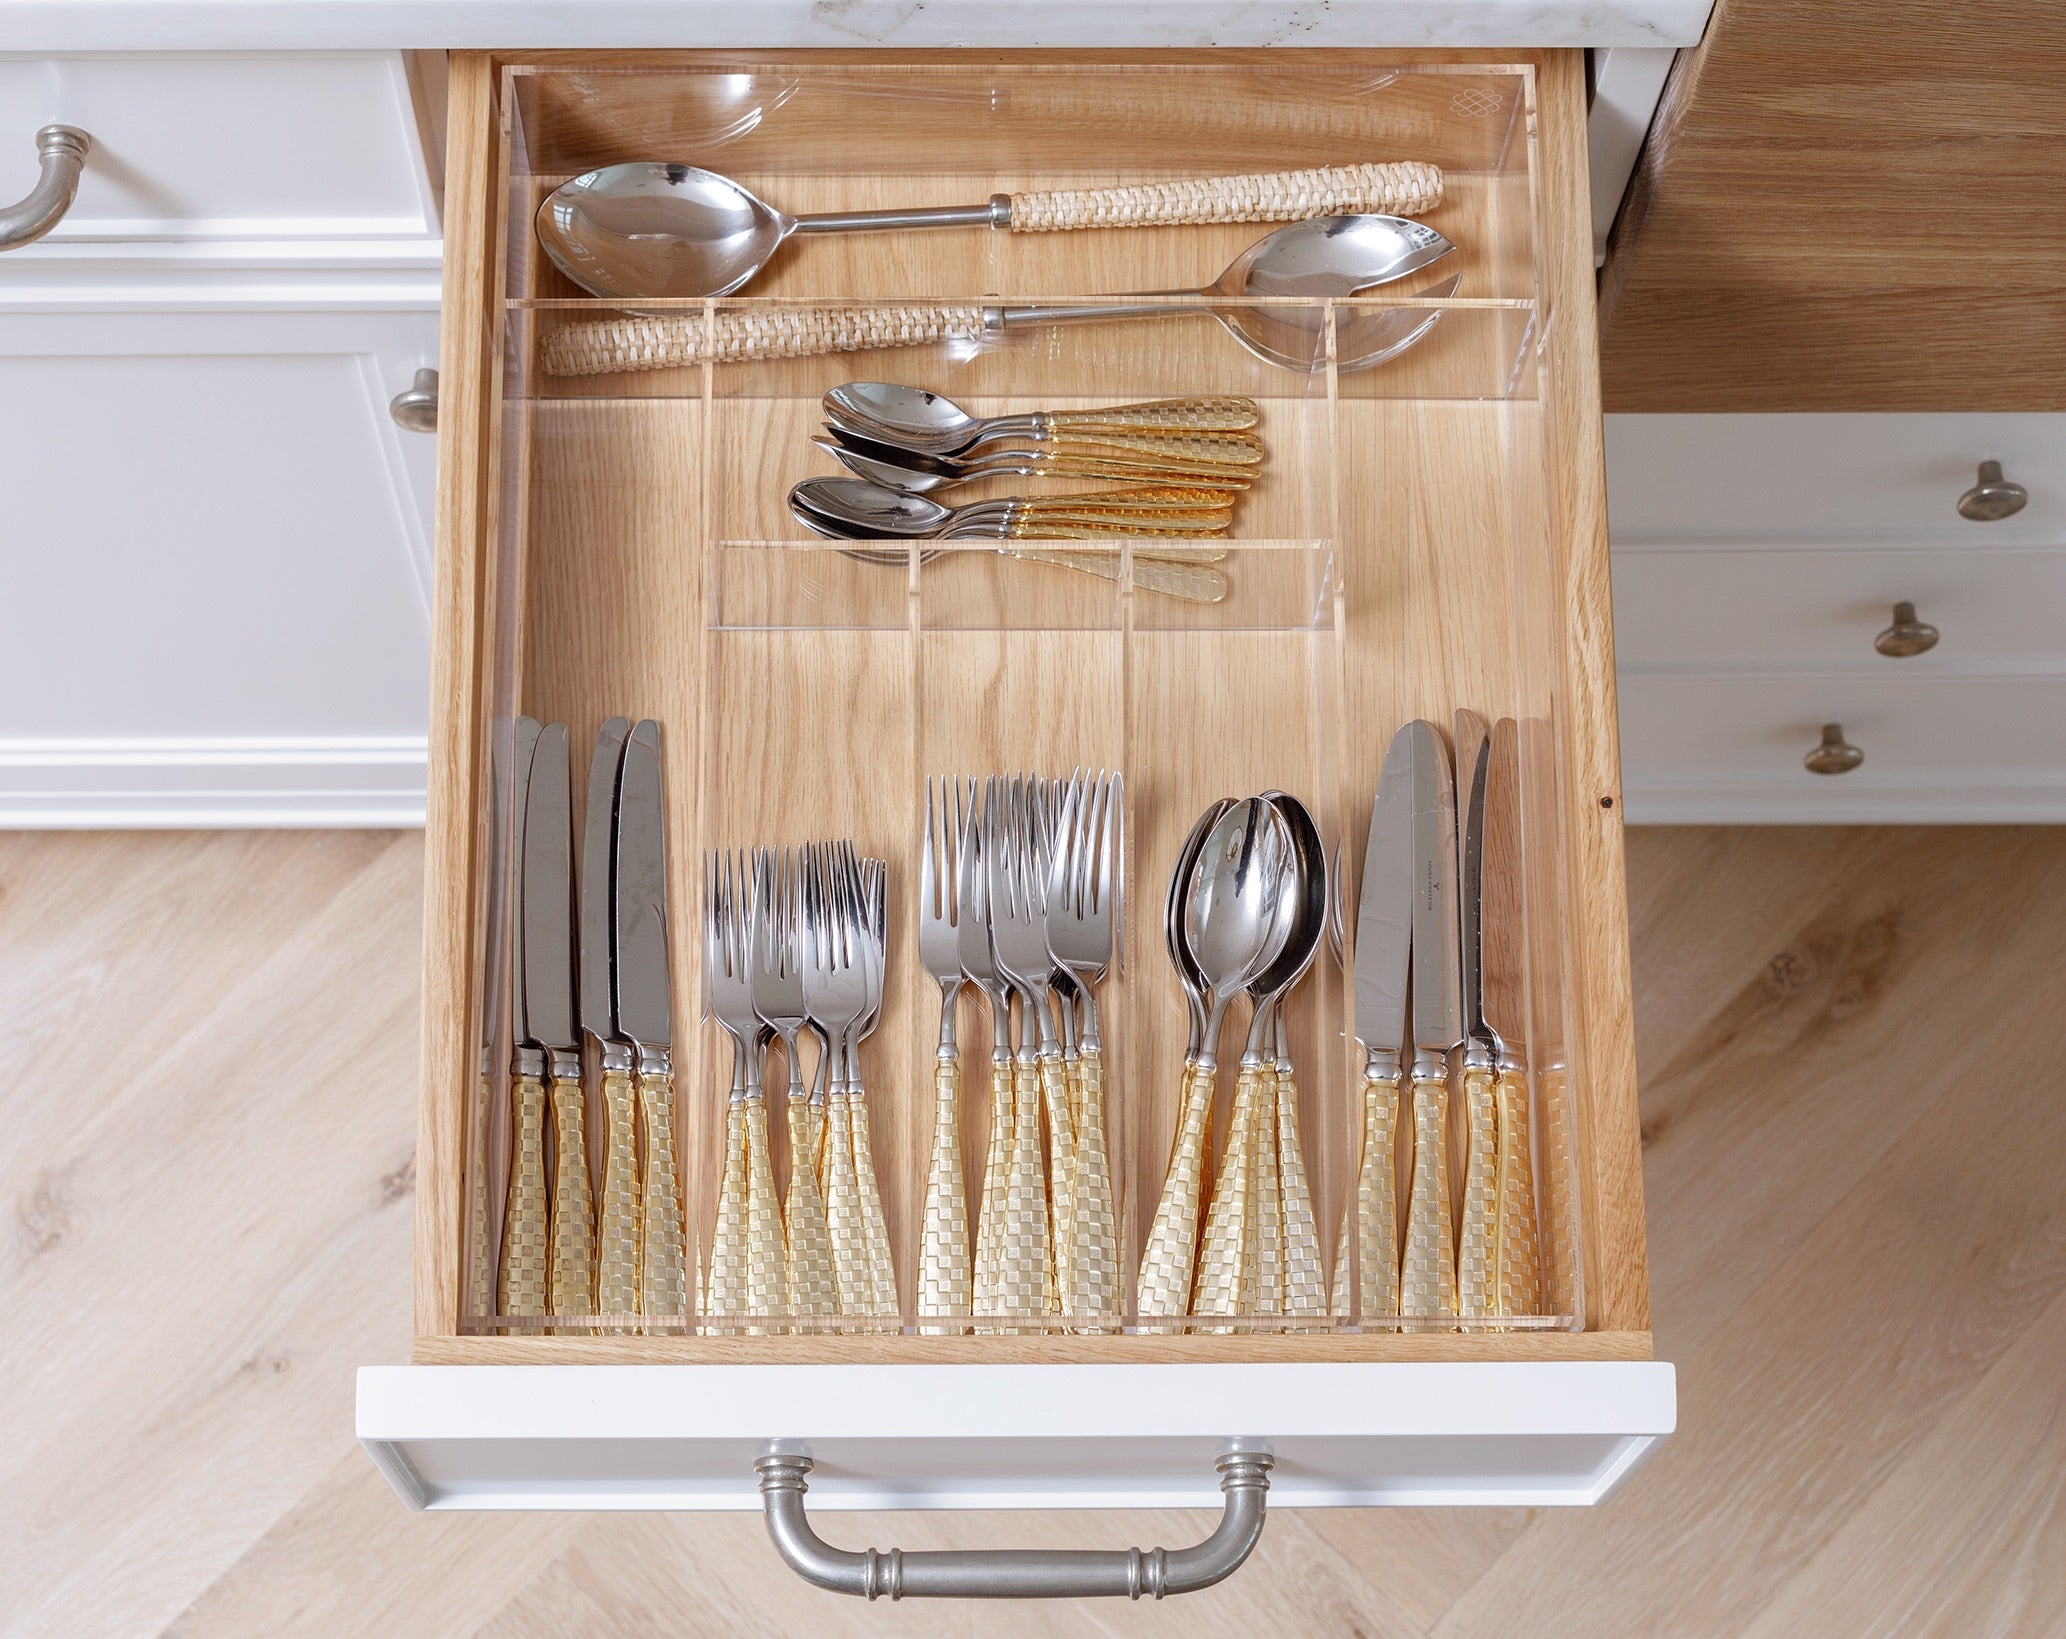 Neat and organized kitchen silverware drawer. 